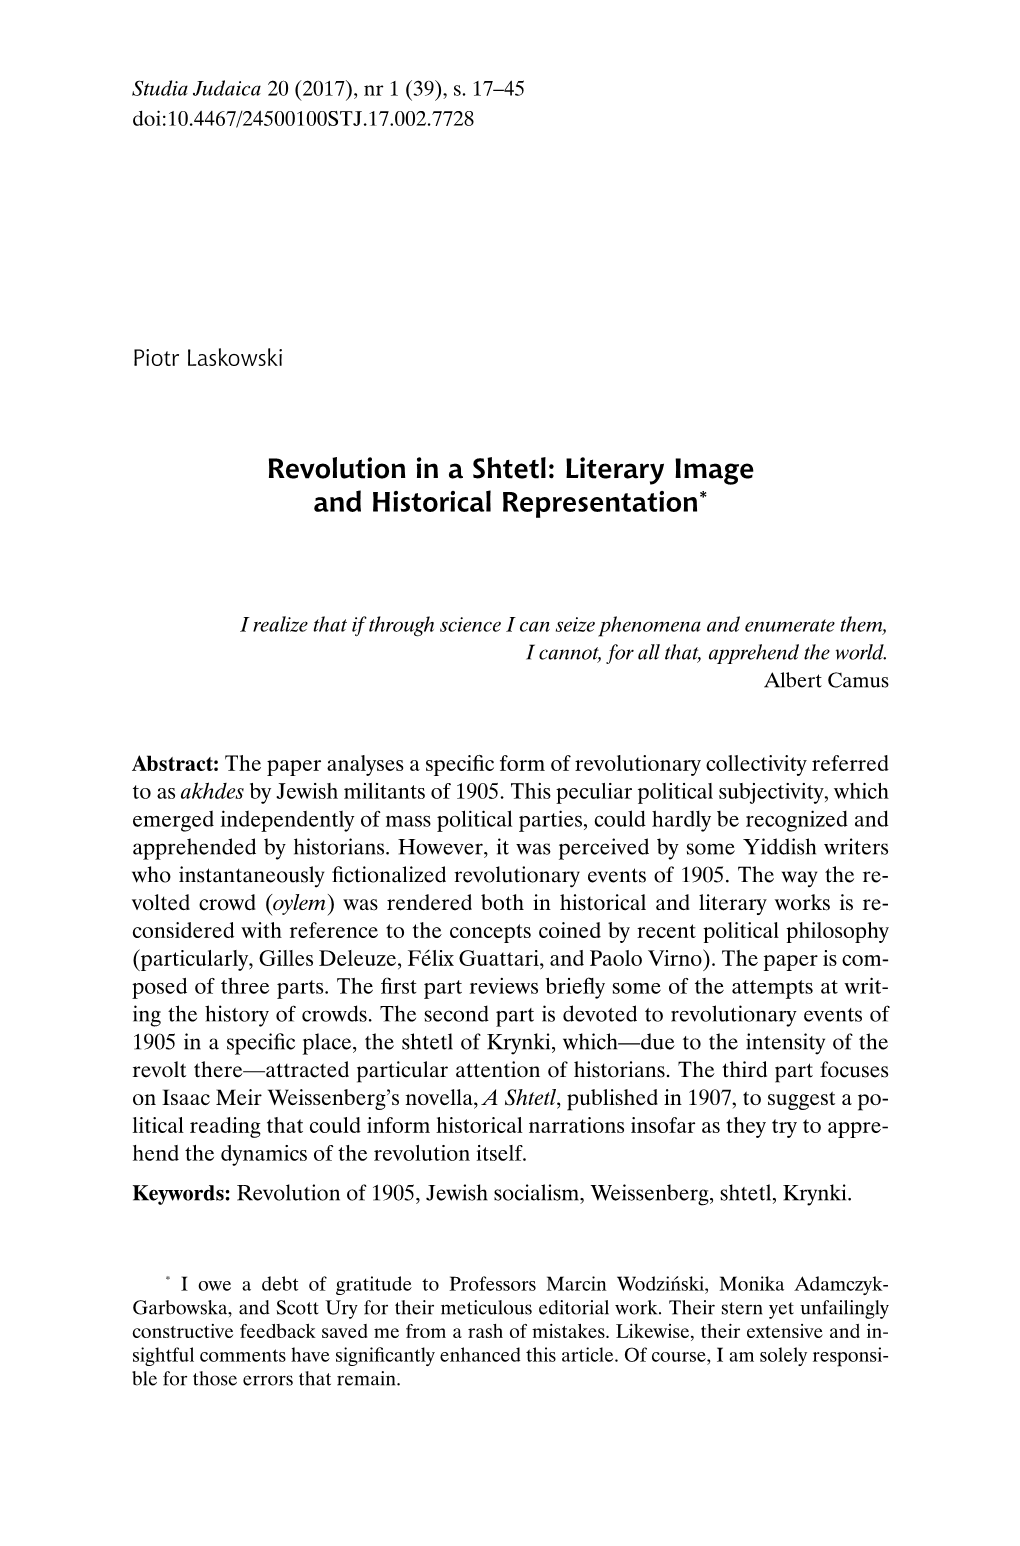 Revolution in a Shtetl: Literary Image and Historical Representation*